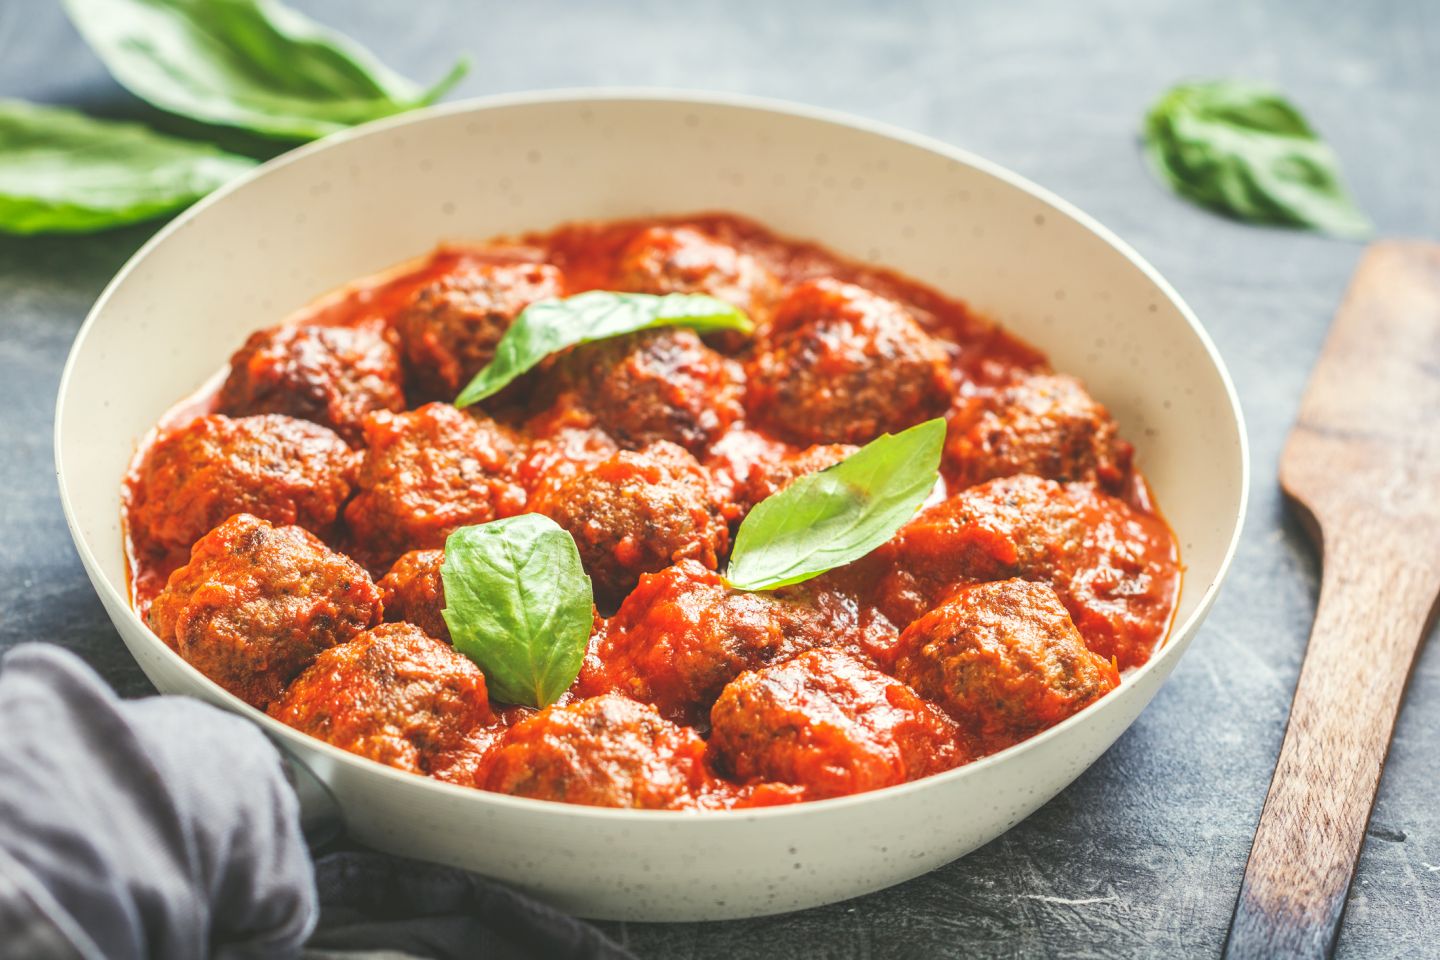 How to Make Italian Meatballs?